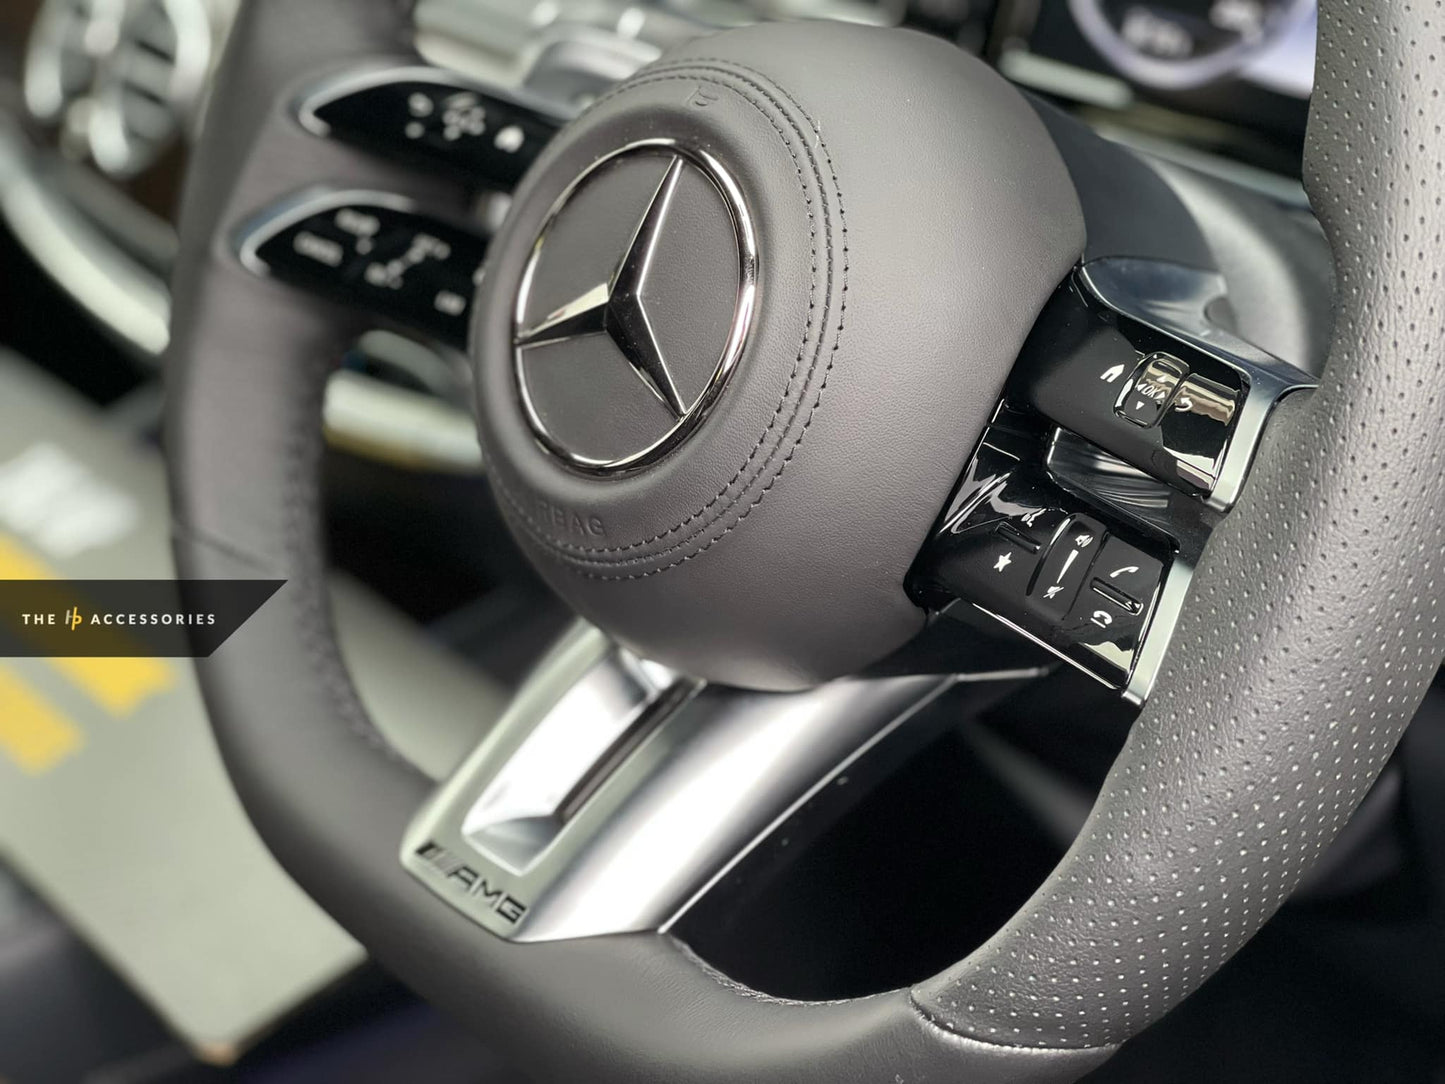 Mercedes Latest AMG Full Leather Steering Wheel